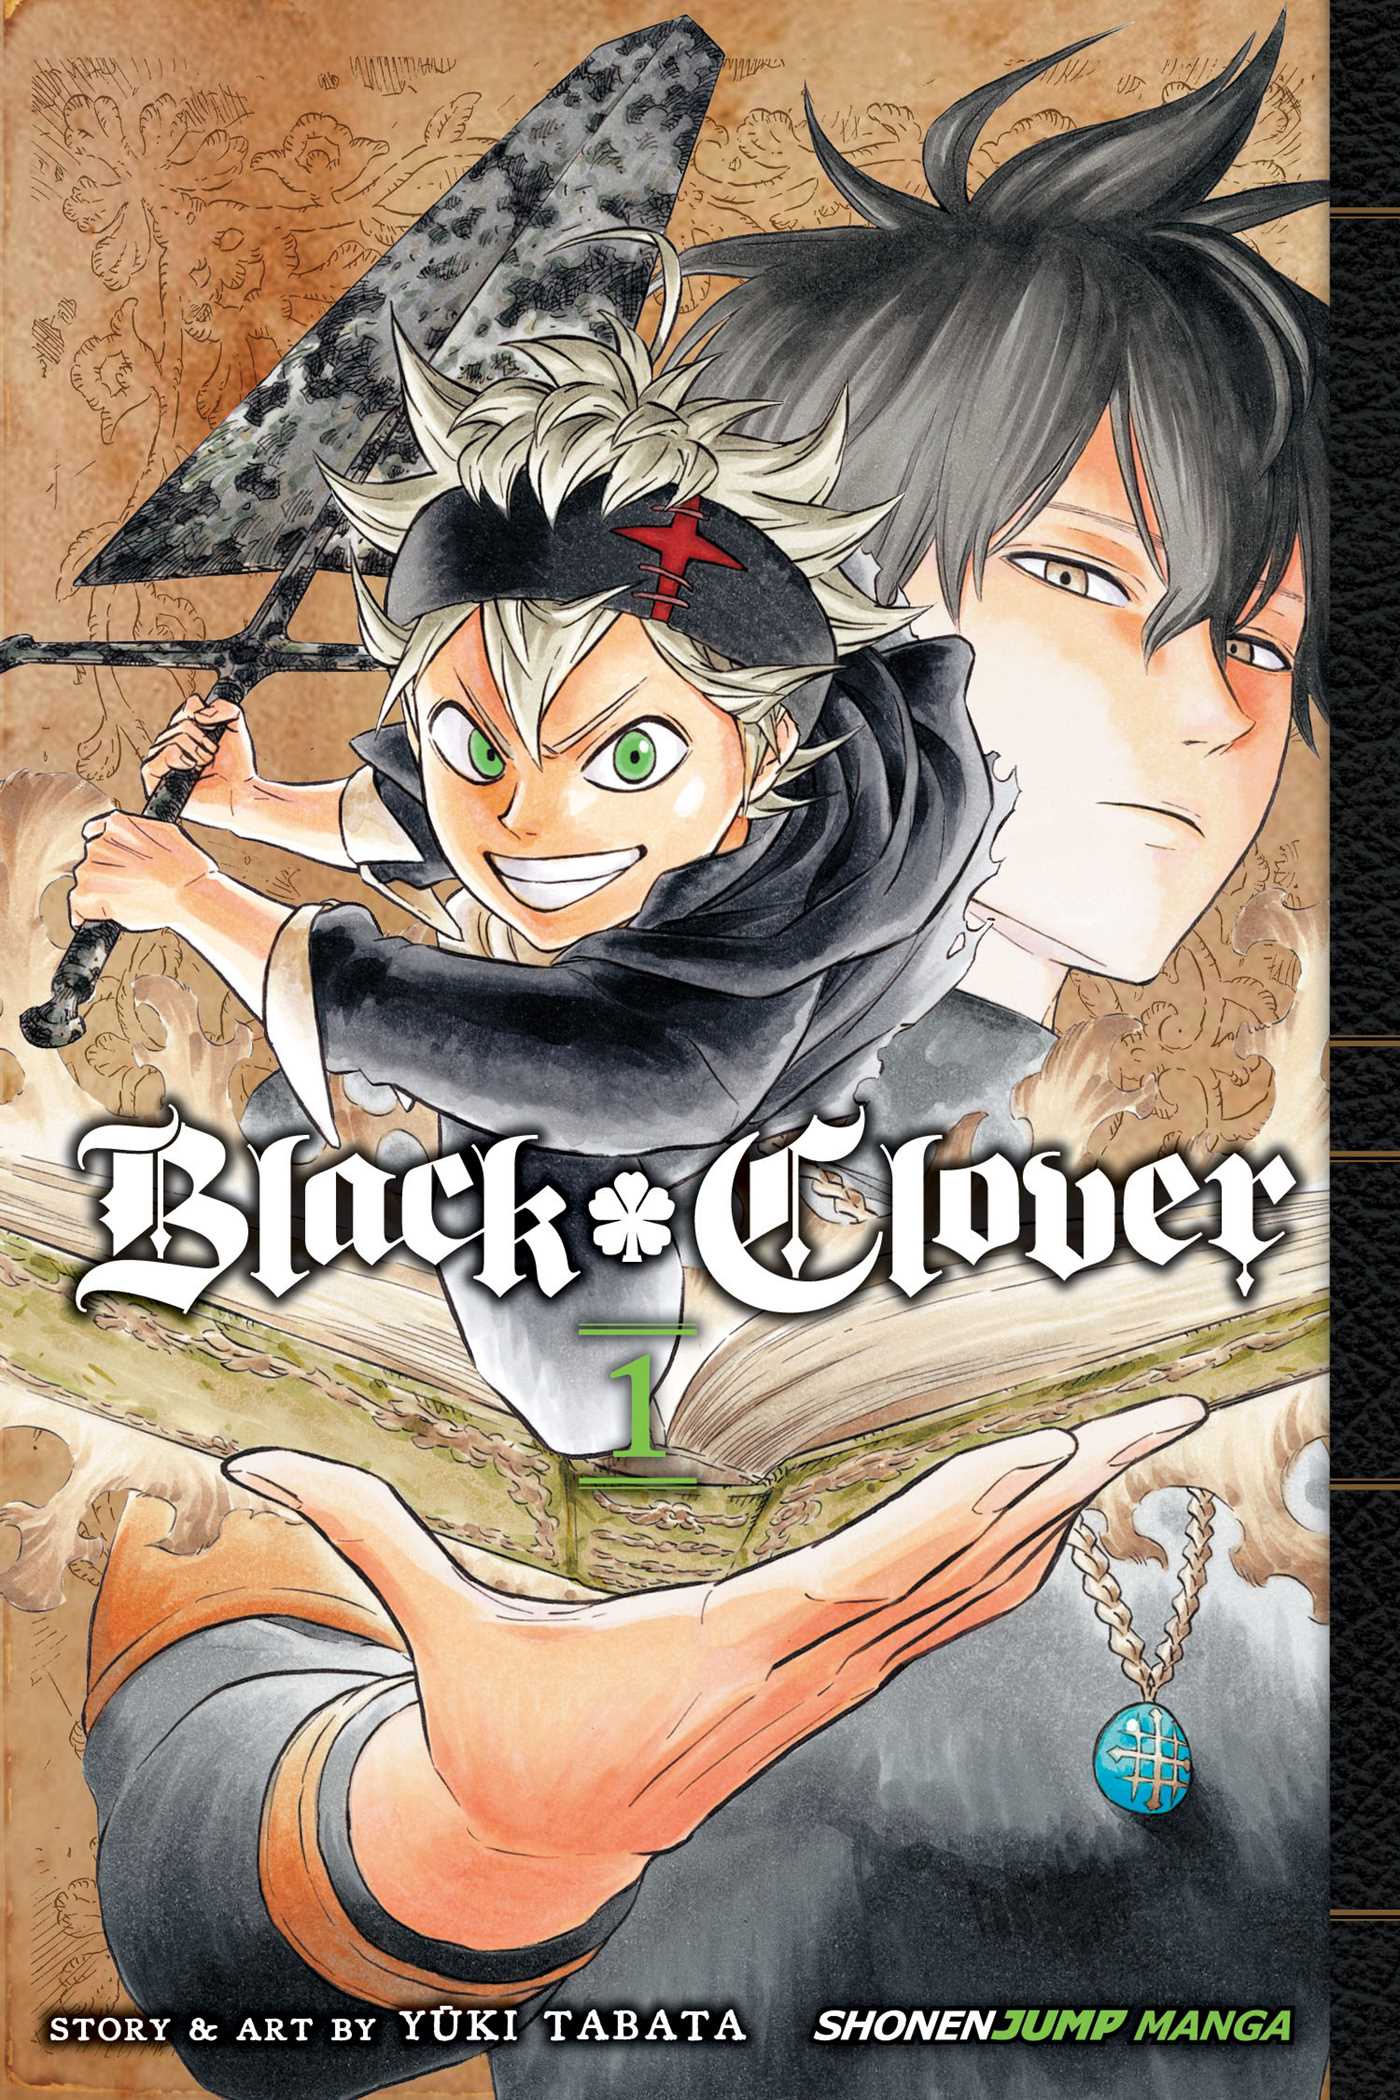 Black Clover - One Sheet Premium Poster' Photo